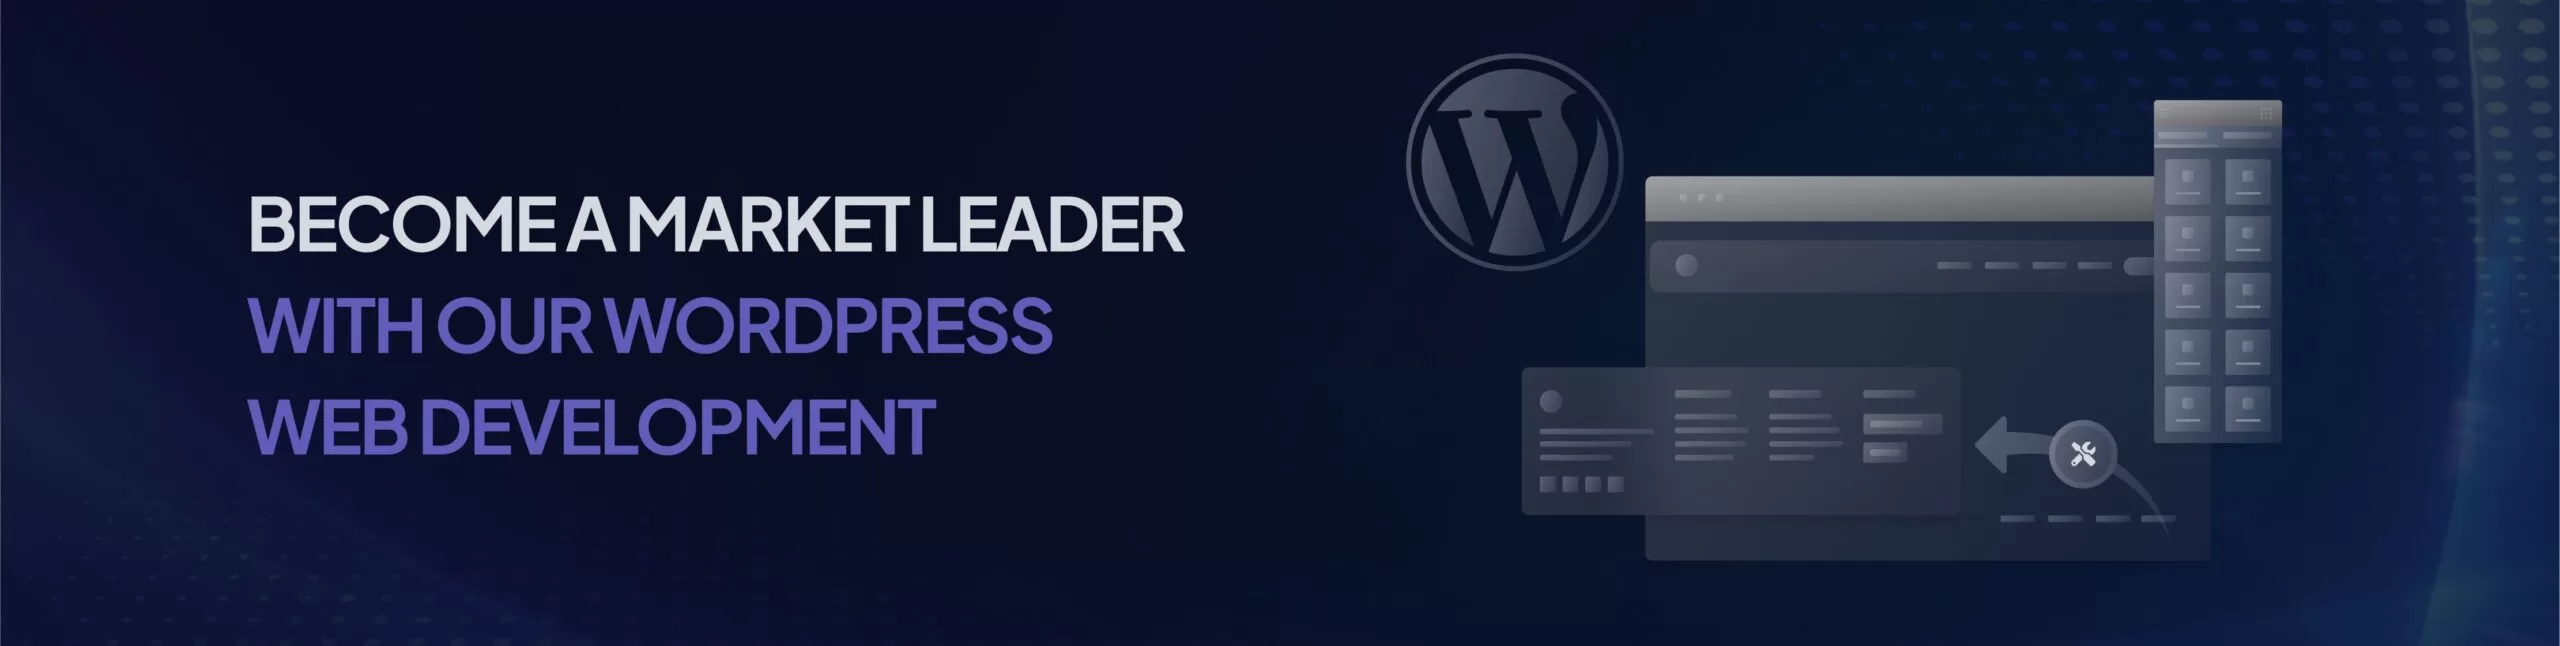 best wordpress website development services company